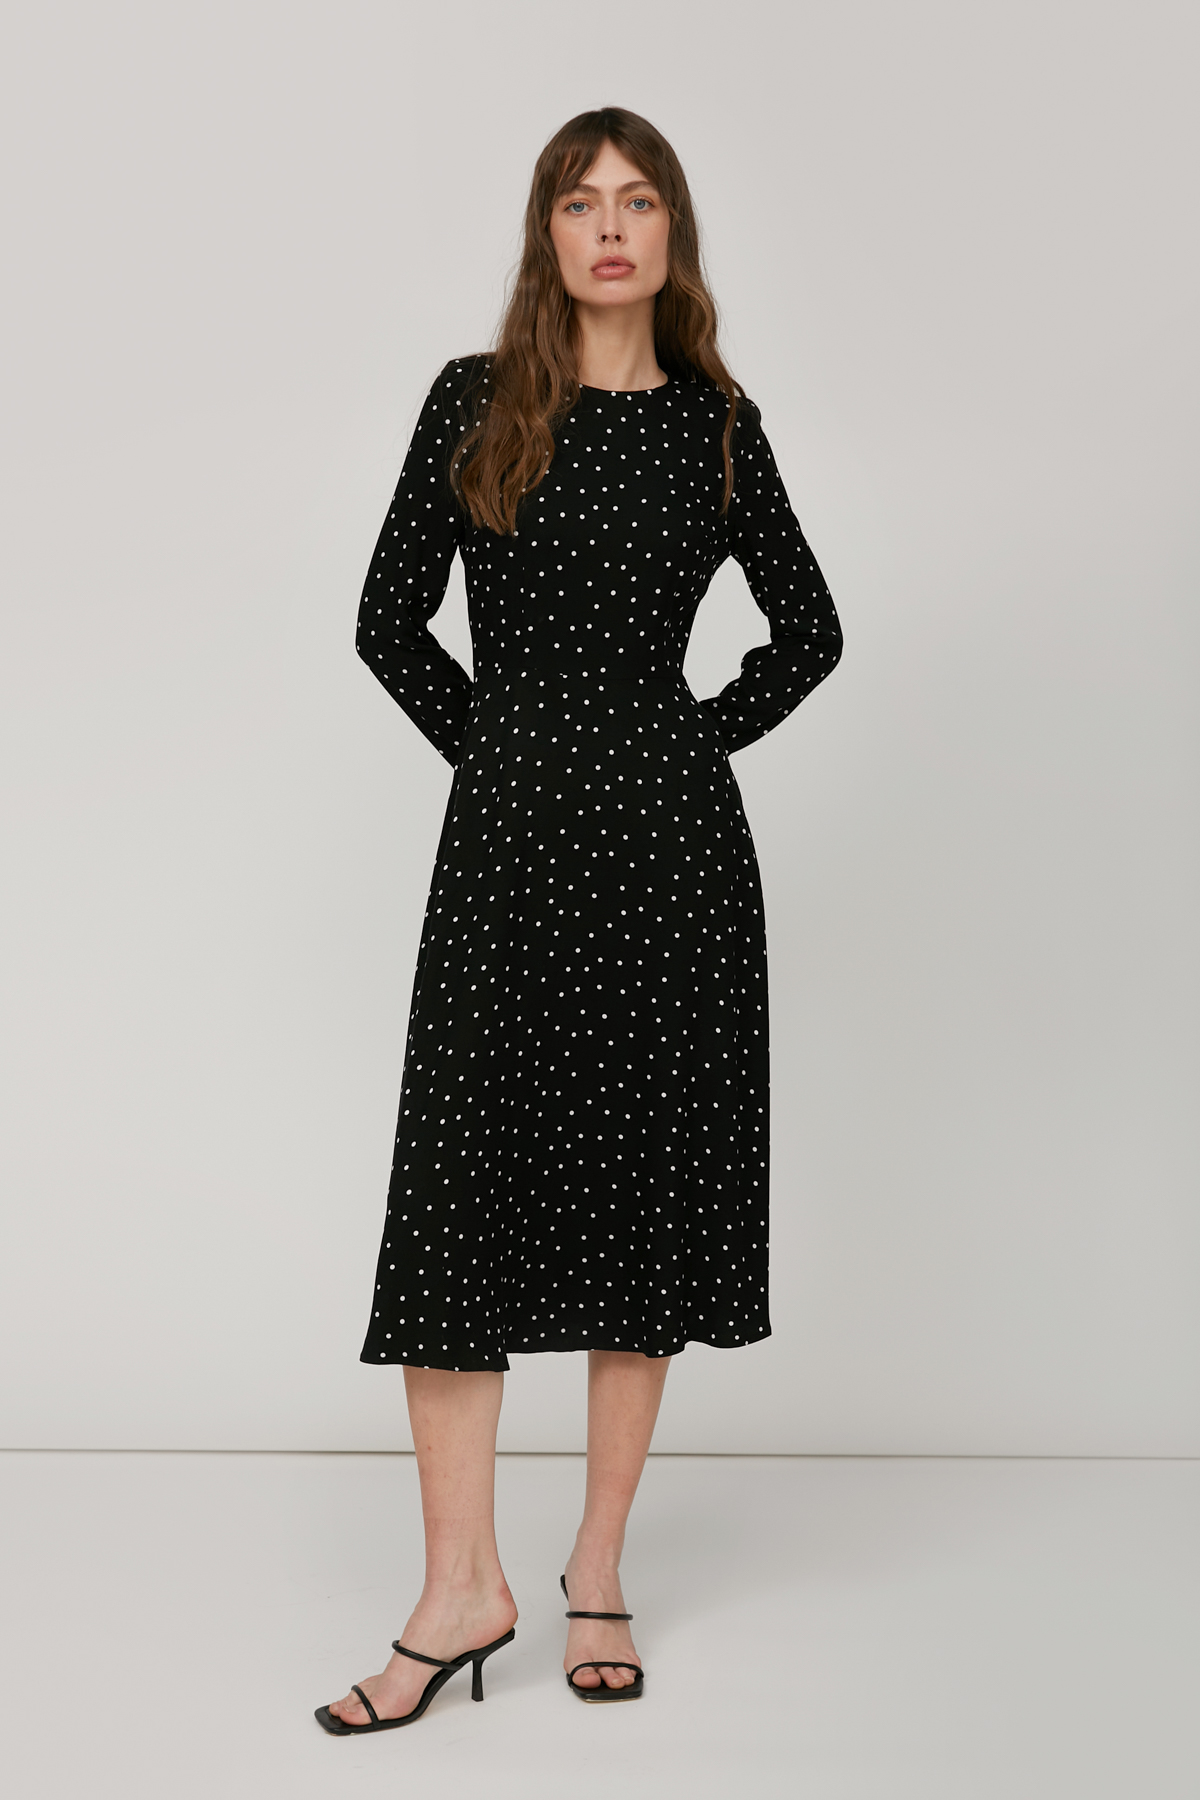 Midi black dress with a white polka dot print , photo 1